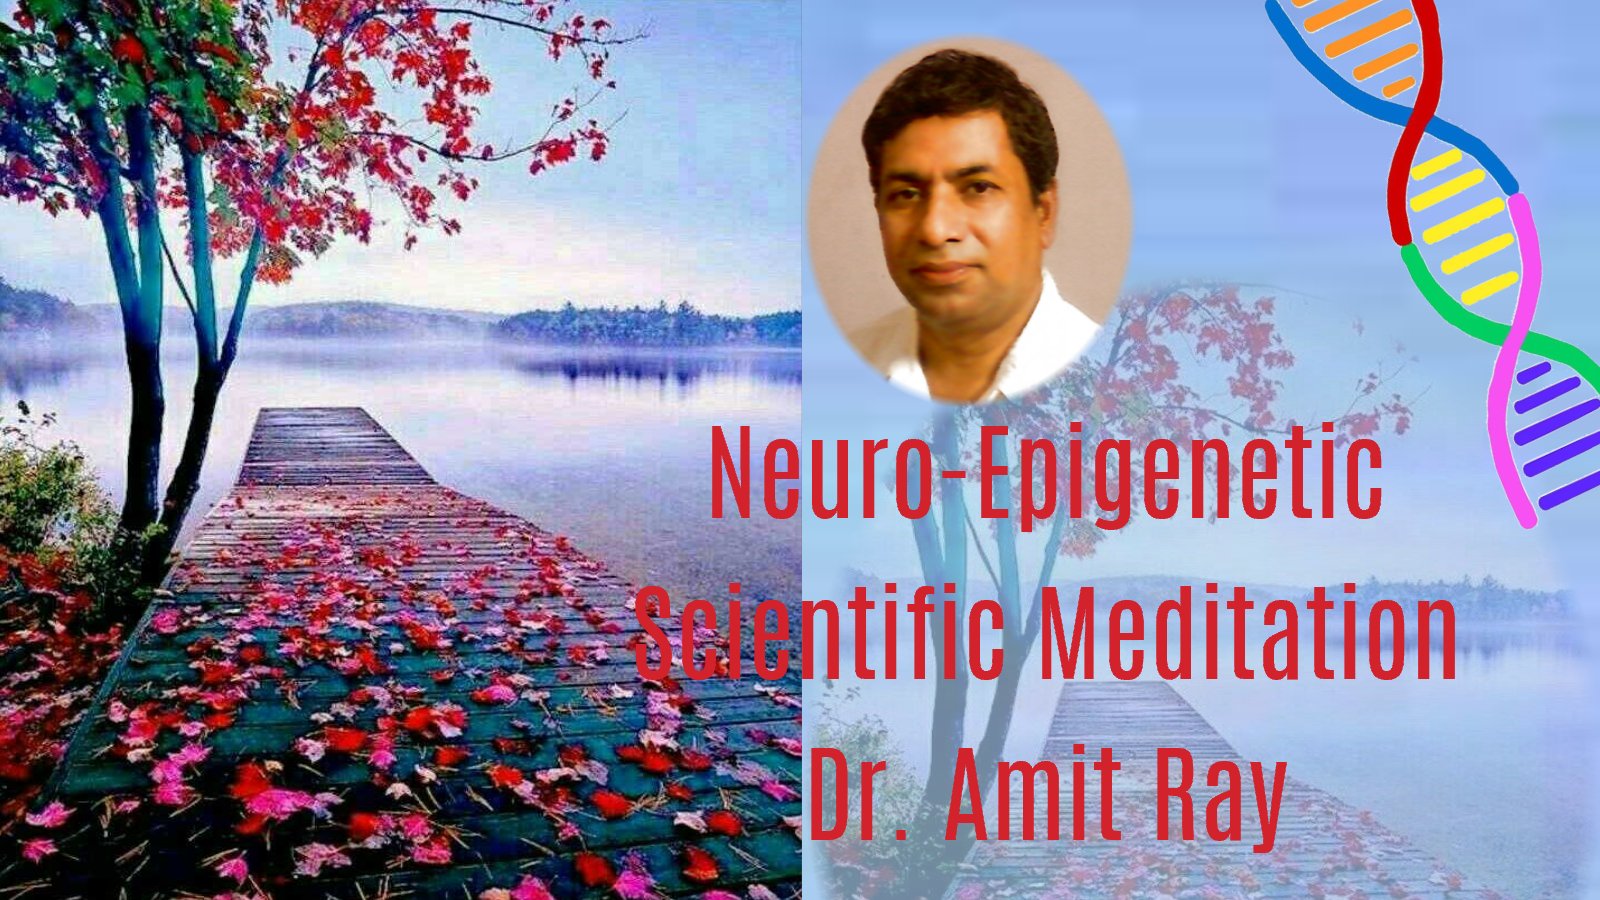 Neuro-Epigenetic Scientific Meditation - Amit Ray Teachings